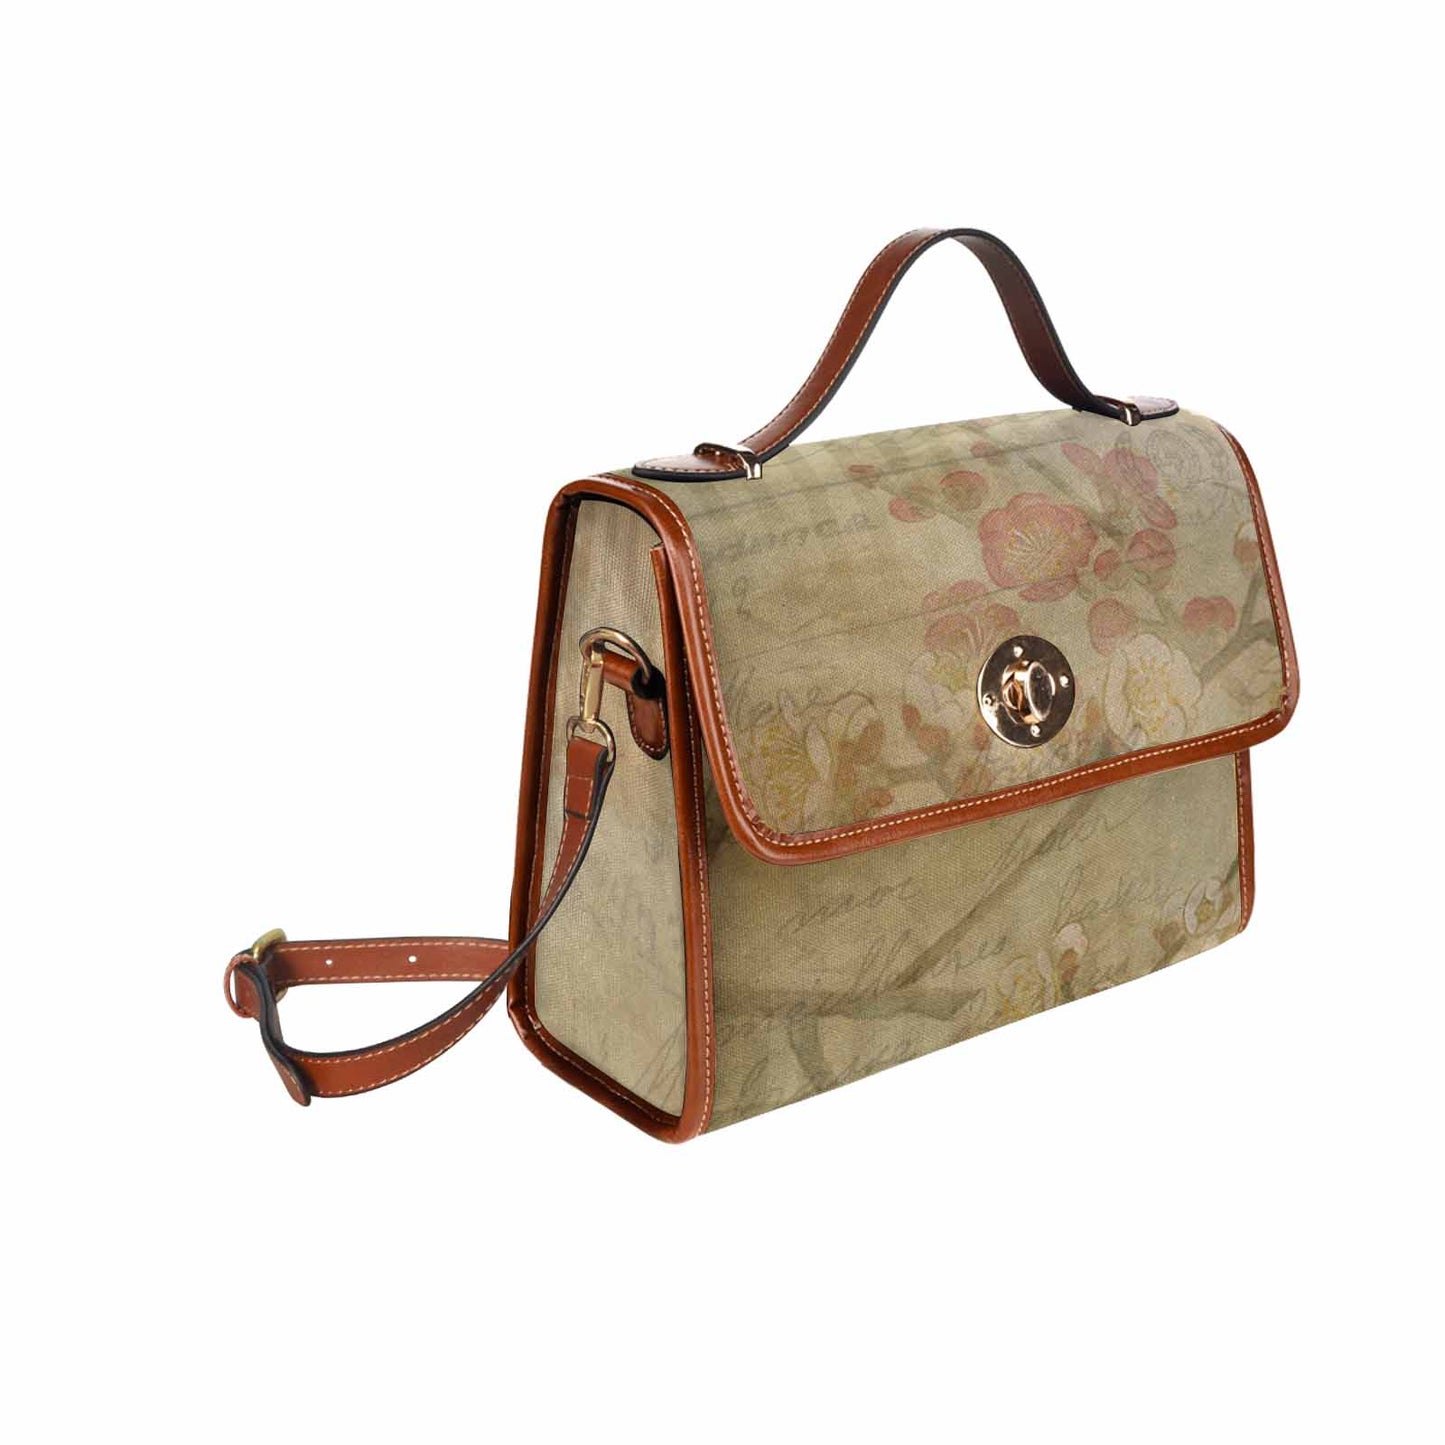 Antique handbag, MODEL 1695361, Design 03